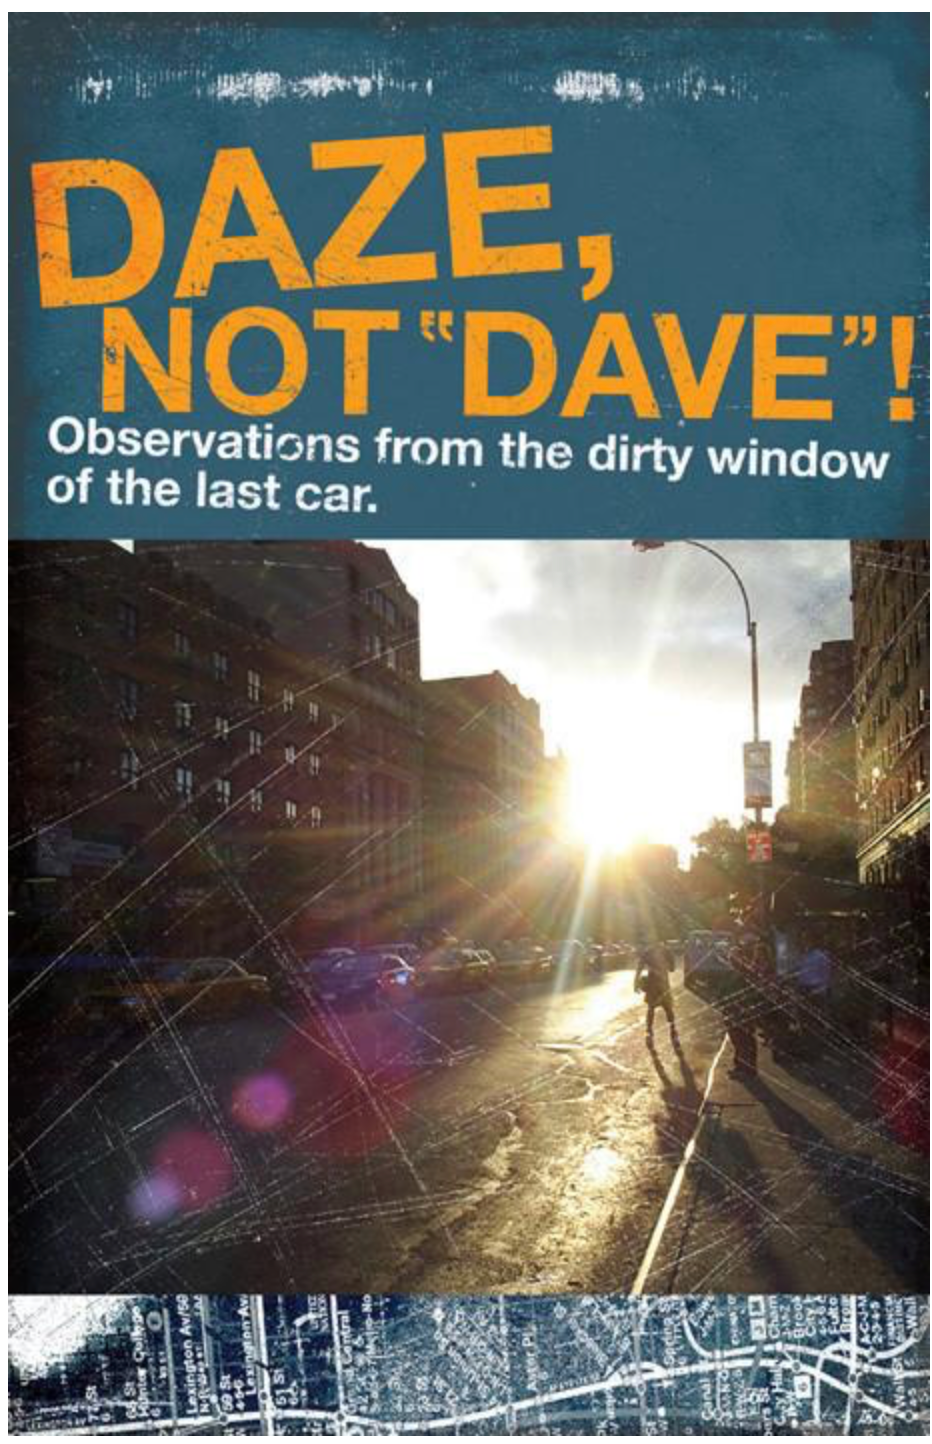 Daze - "Daze not Dave" Zine